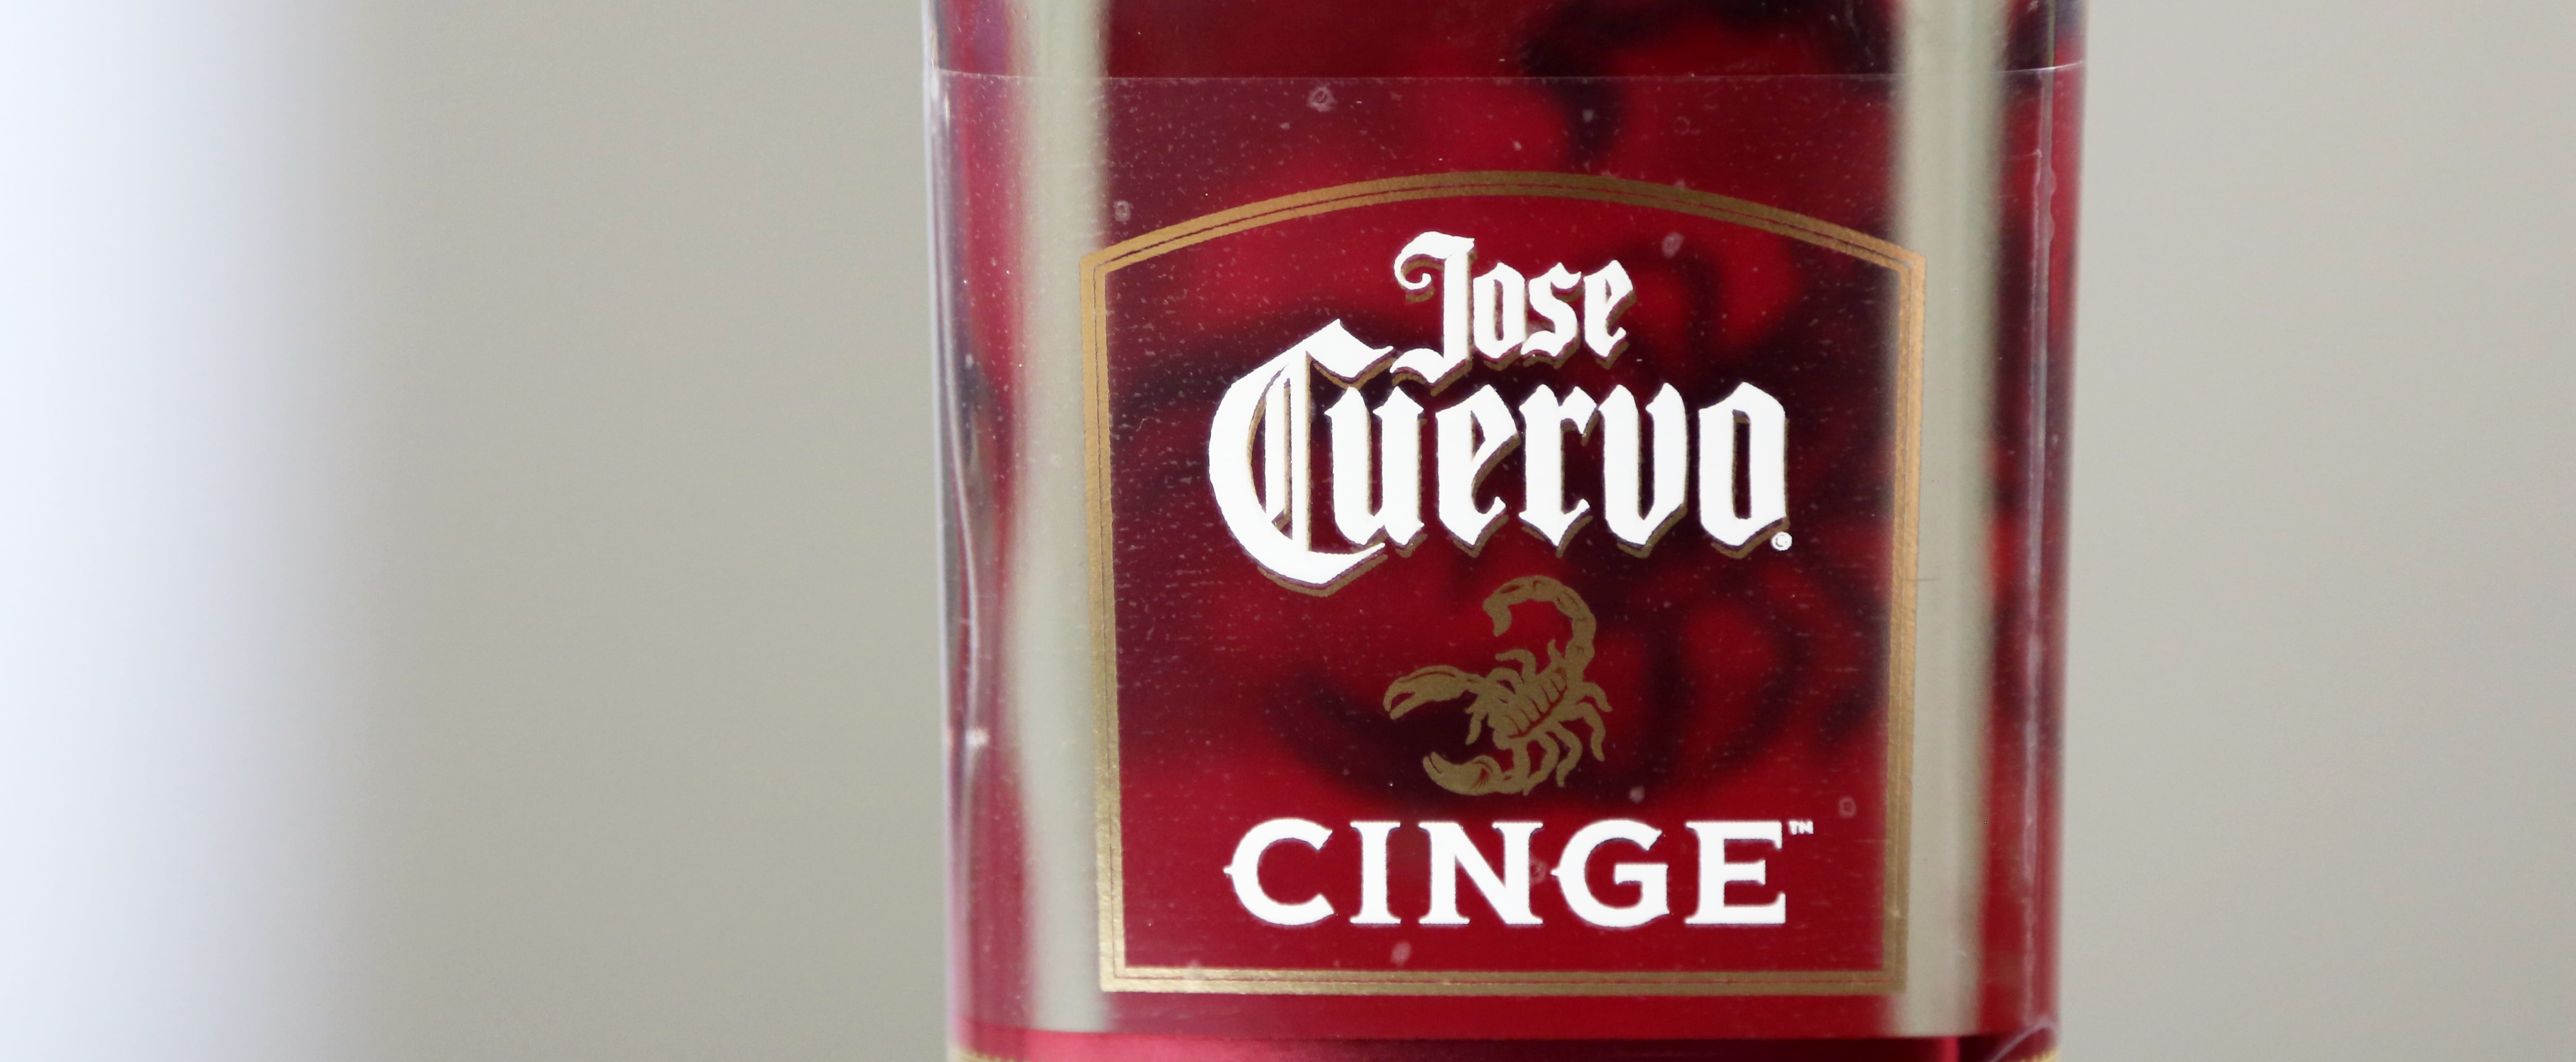 Jose Cuervo Cinge Cinnamon Tequila